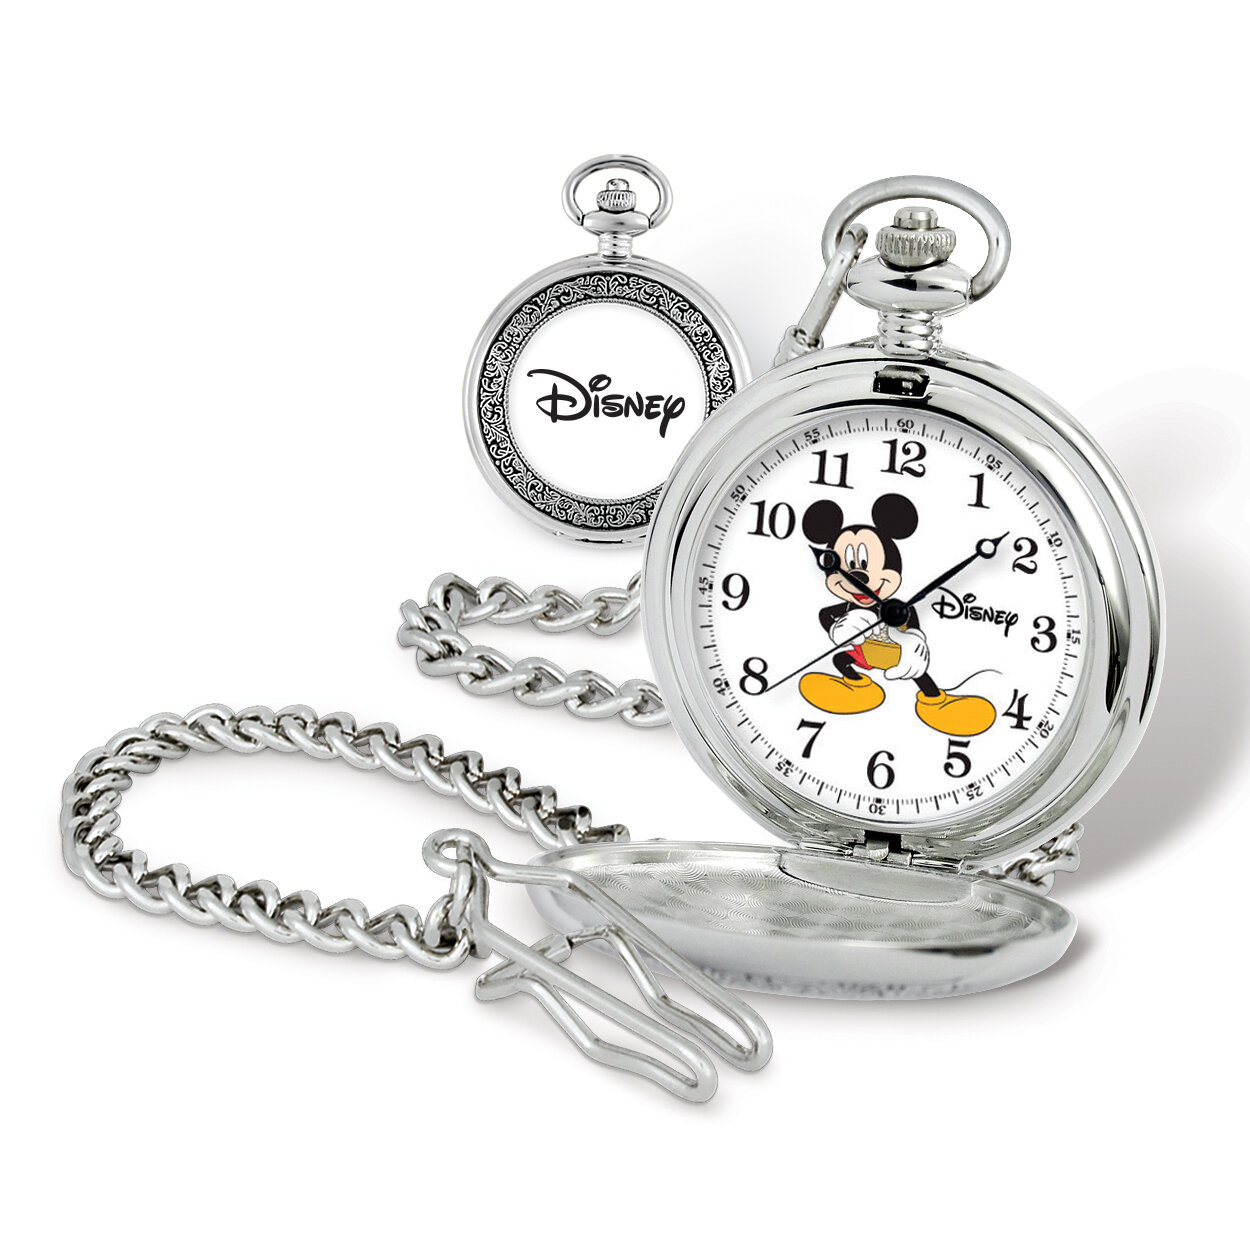 Disney Mickey Mouse Pocket Watch with Chain XWA5728